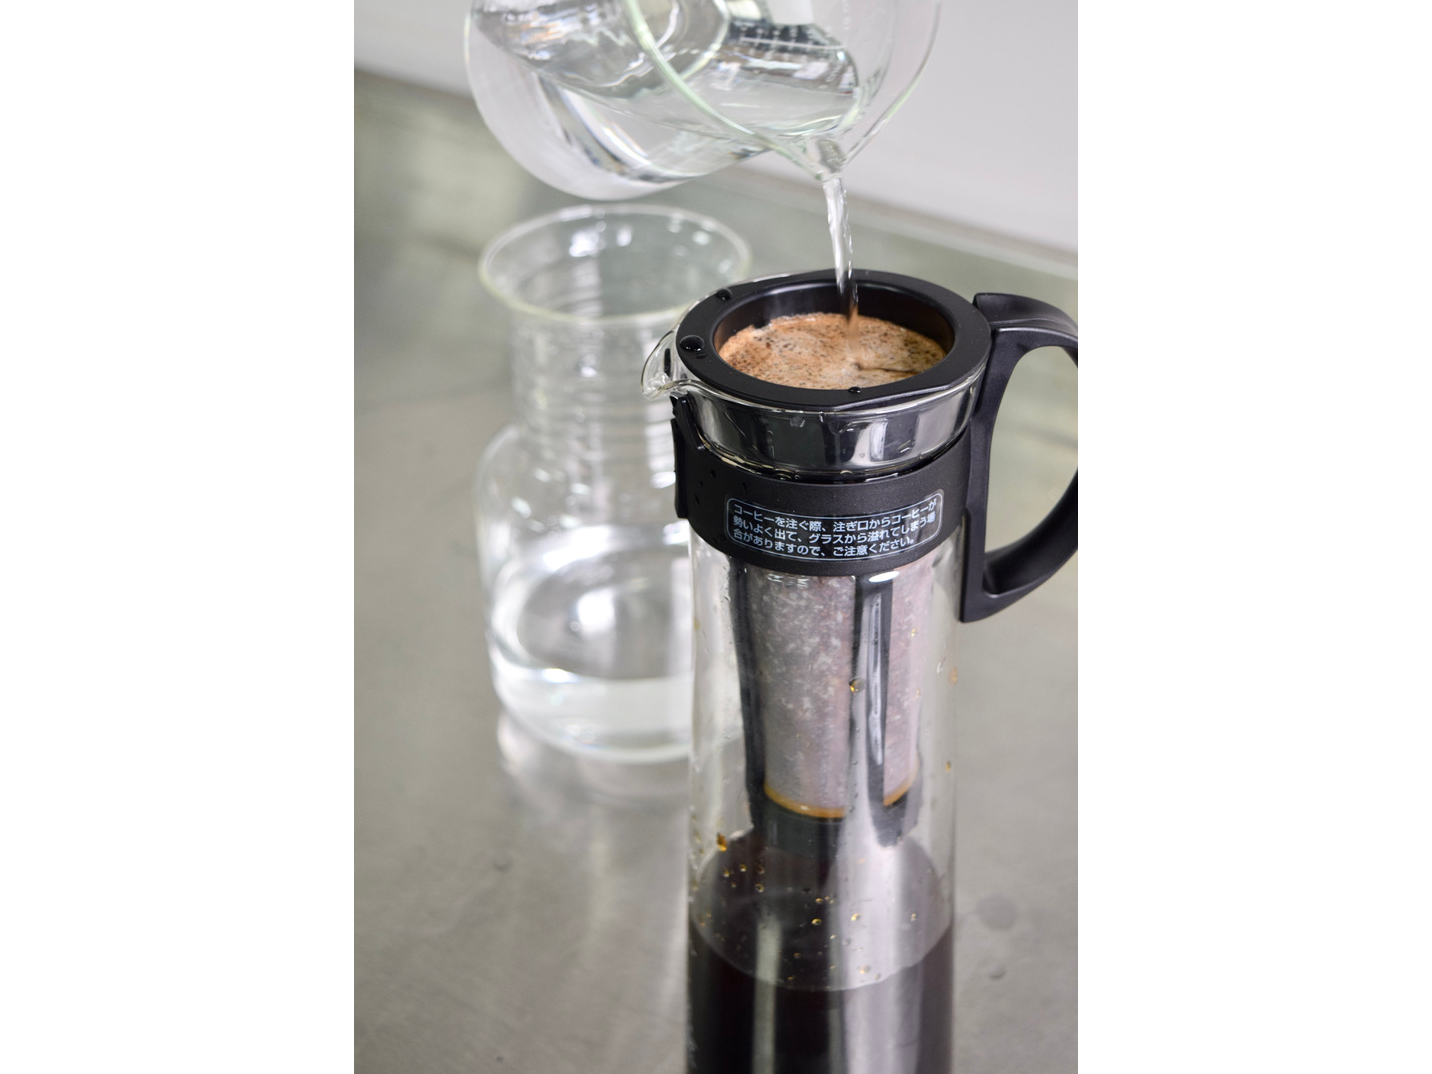 Hario Mizudashi Cold Brew Coffee Pot Cold Brew Coffee Maker  1000mL, Black: Toddy: Coffee Servers